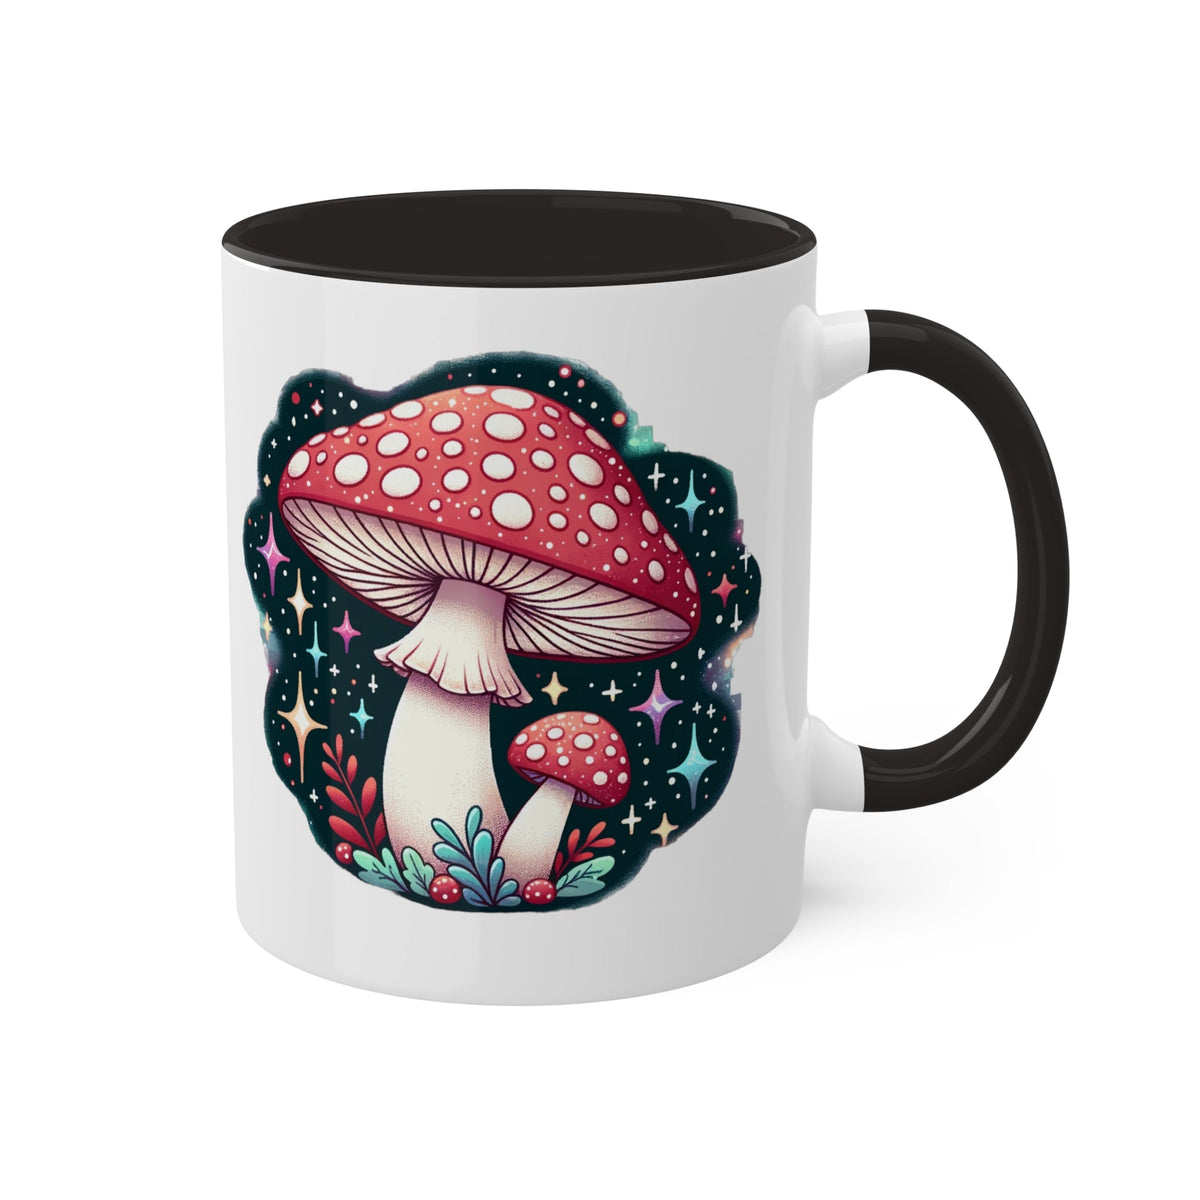 Celestial Mushroom Ceramic Mug, 11oz